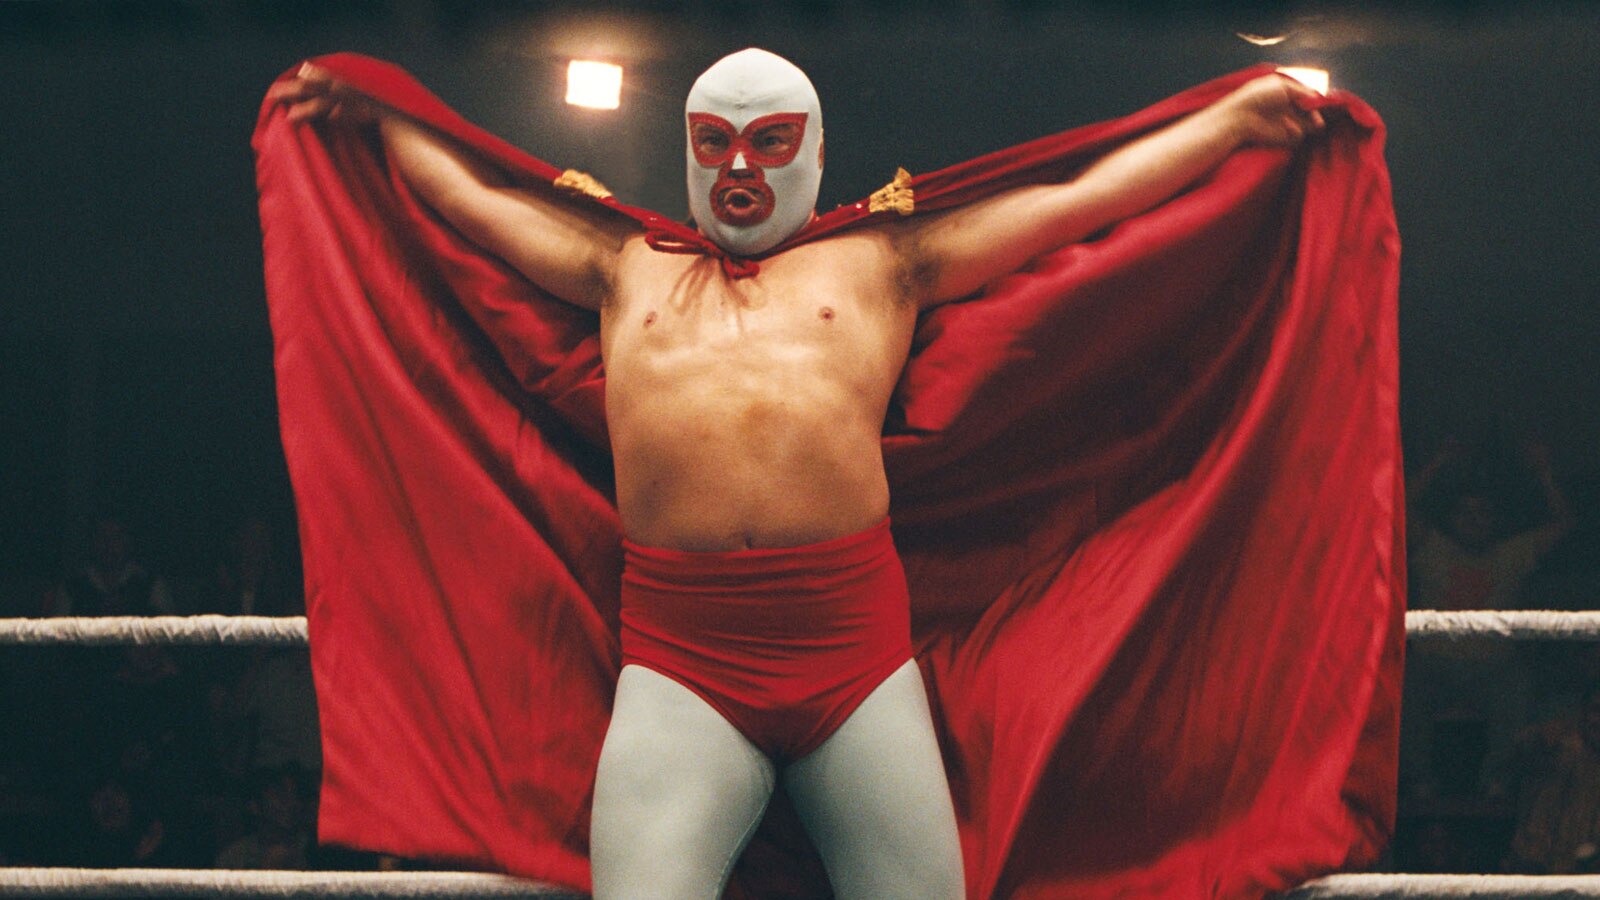 Jack Black fighting as Nacho Libre in Nacho Libre (2006).